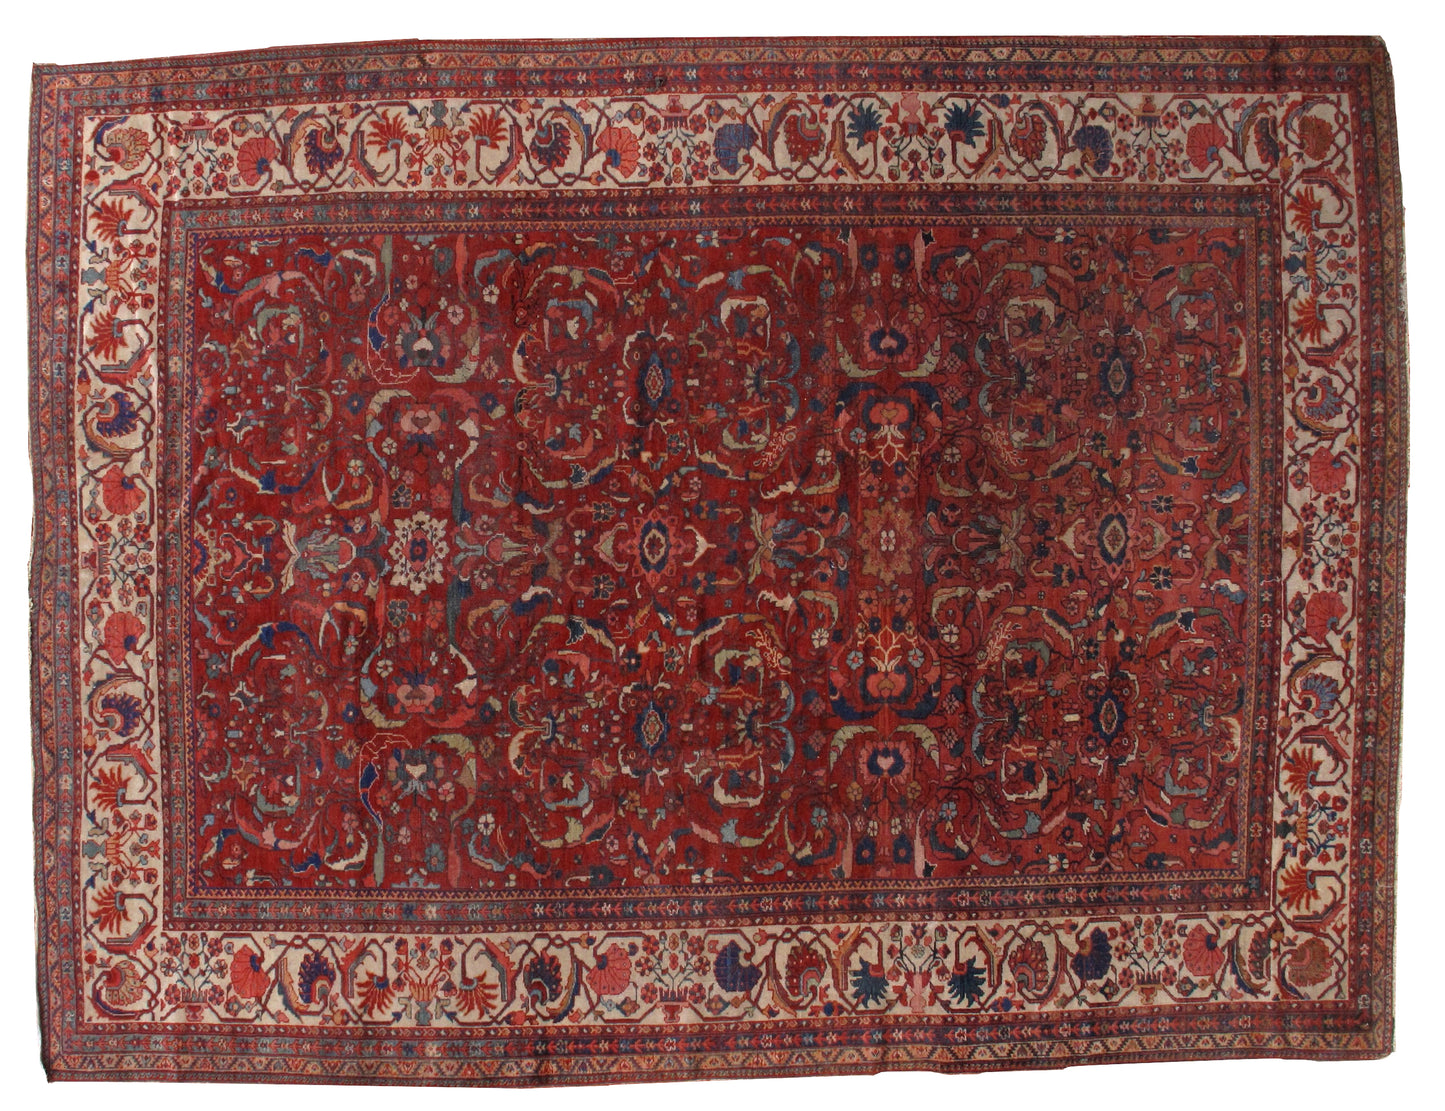 Handmade antique Persian Sultanabad rug 9.10' x 13' (303cm x 396cm) 1880s - 1B458